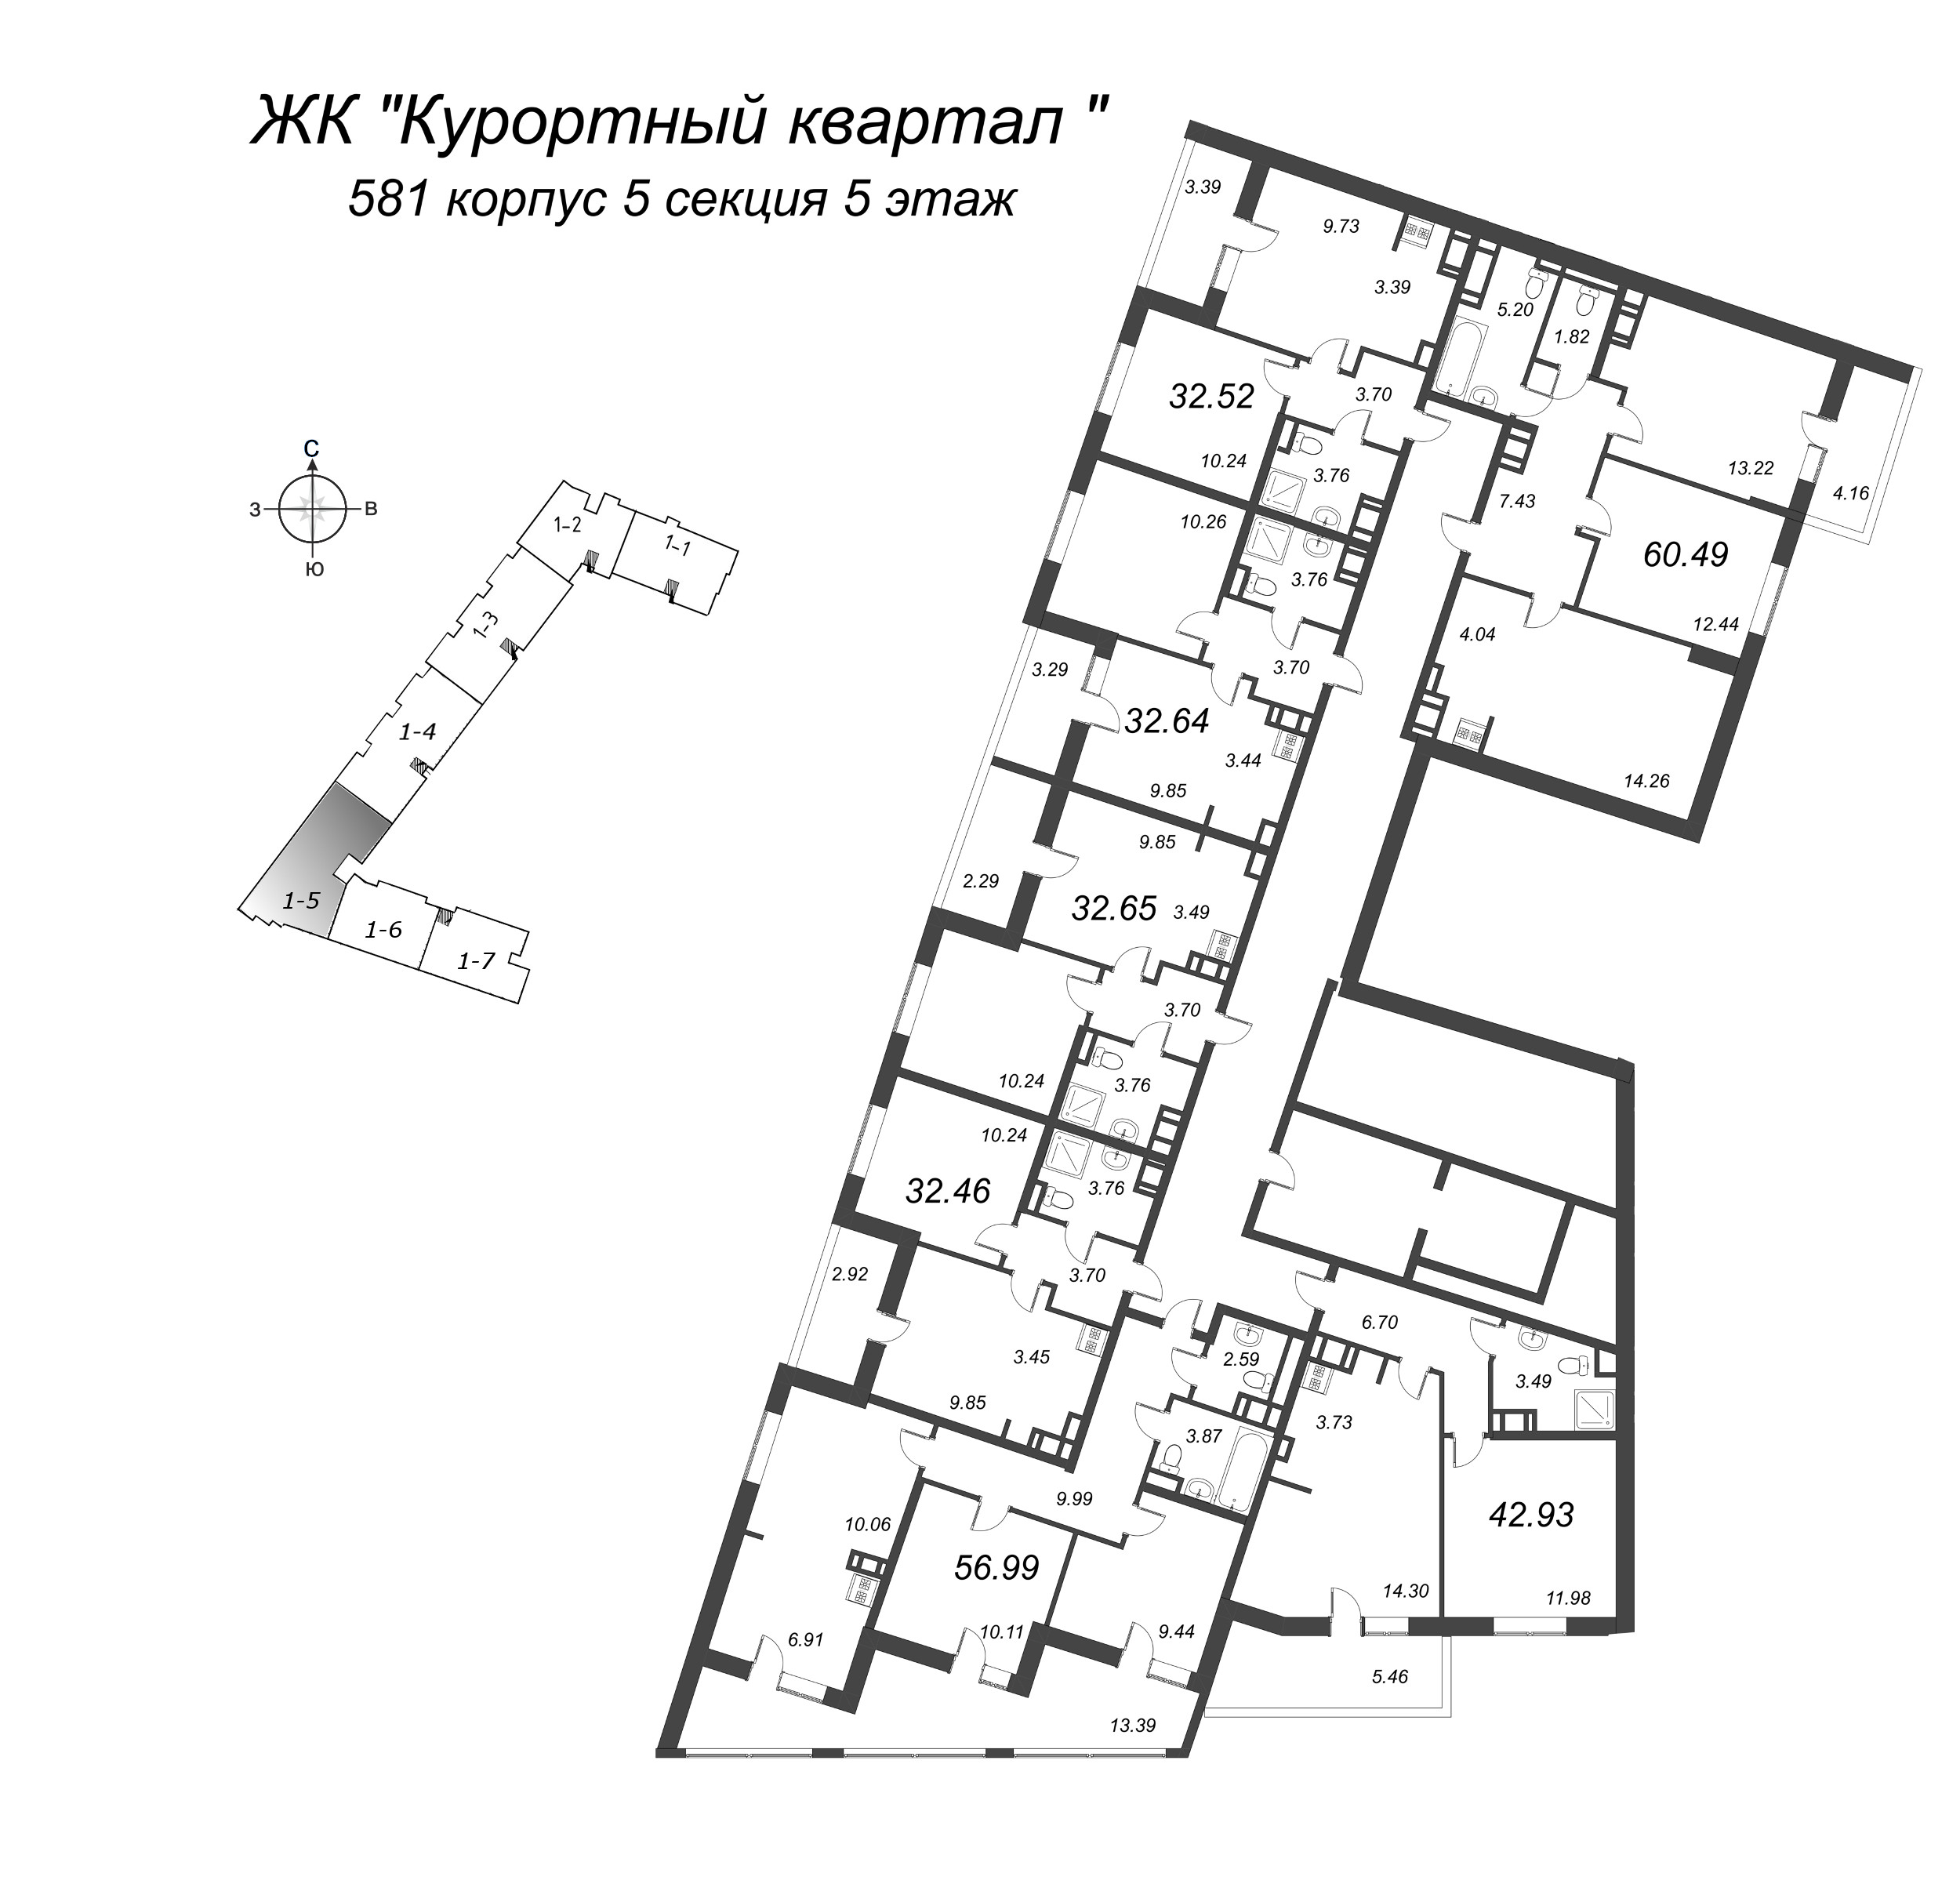 3-комнатная (Евро) квартира, 56.99 м² - планировка этажа